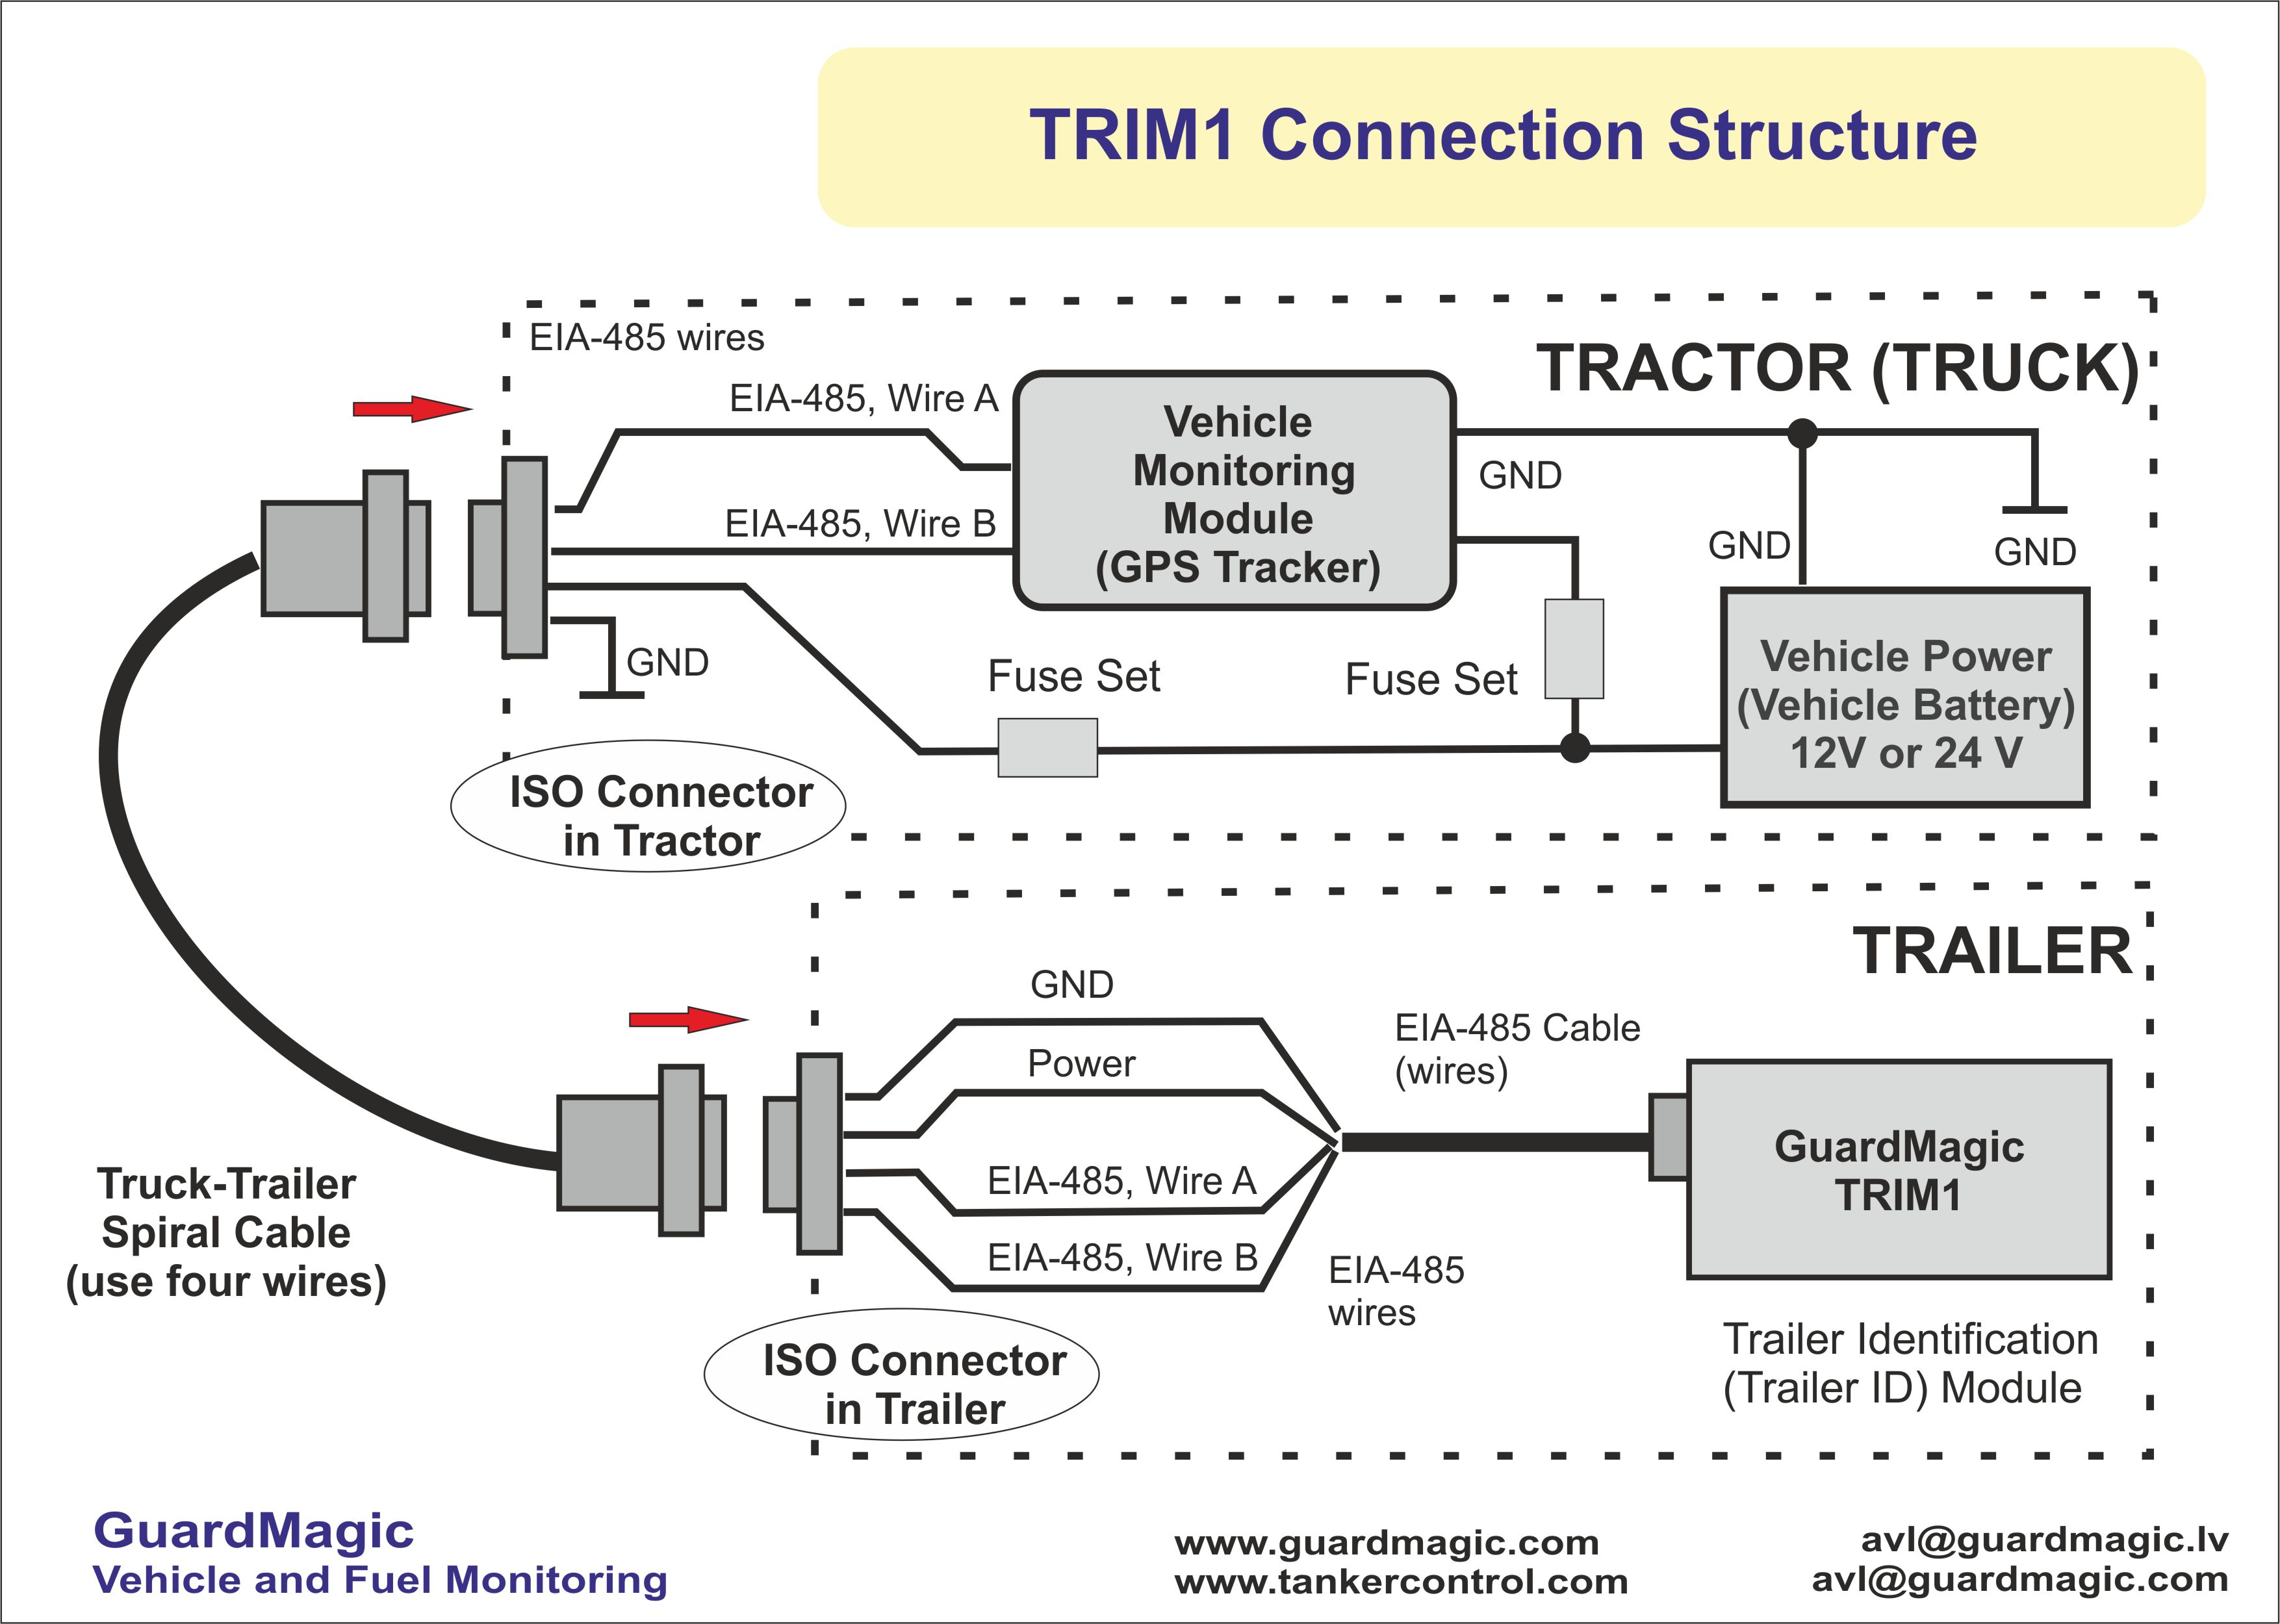 GuardMagic TRIM1 Universal trailer identification module